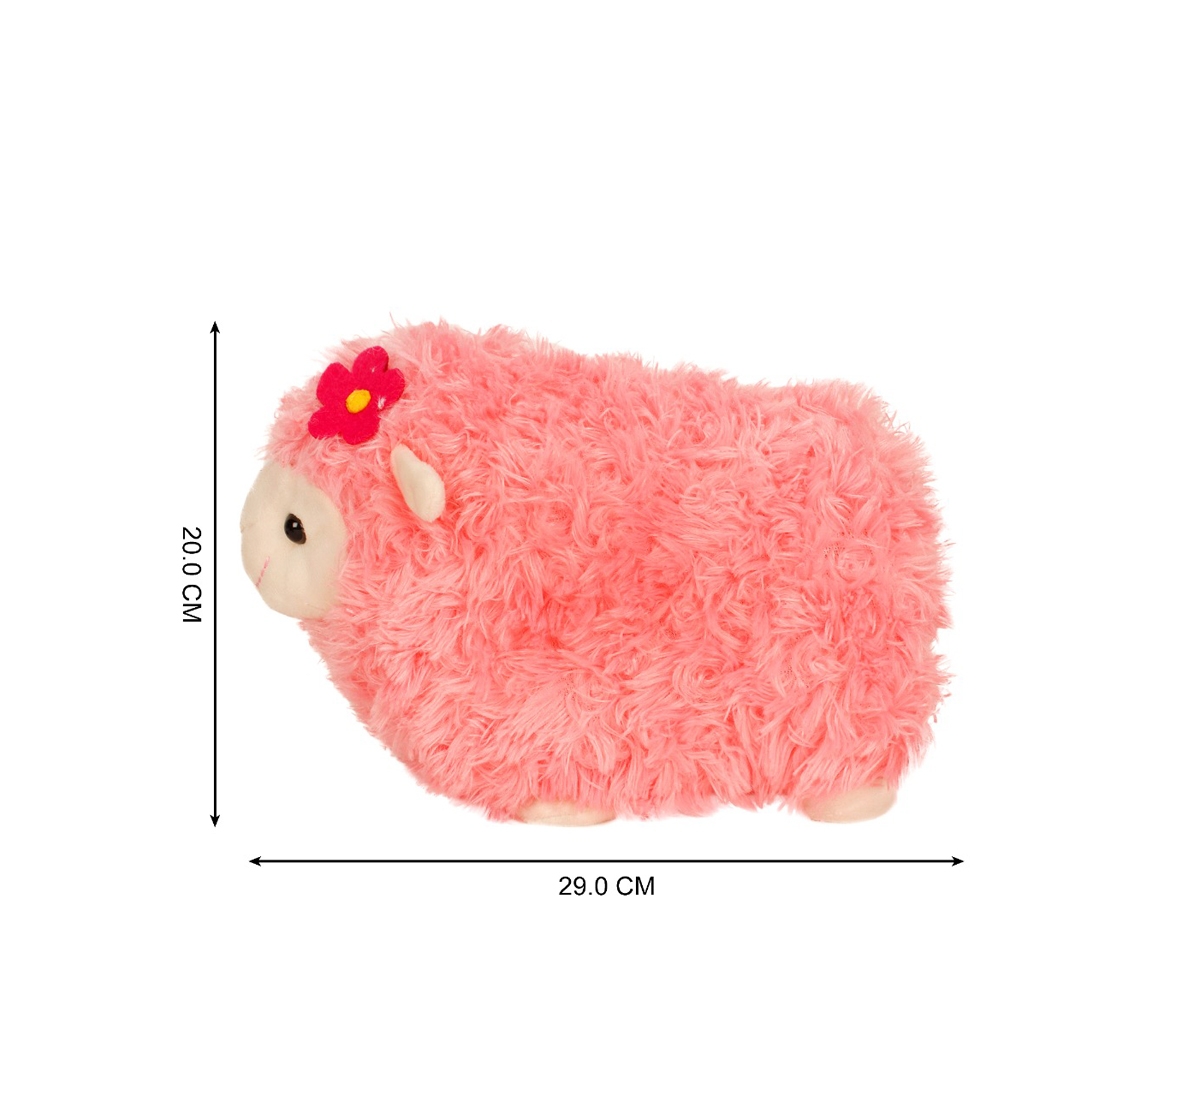 Fuzzbuzz | Fuzzbuzz Pink Lamb Stuffed Animal - 28Cm Quirky Soft Toys for Kids age 0M+ - 20 Cm (Pink) 4